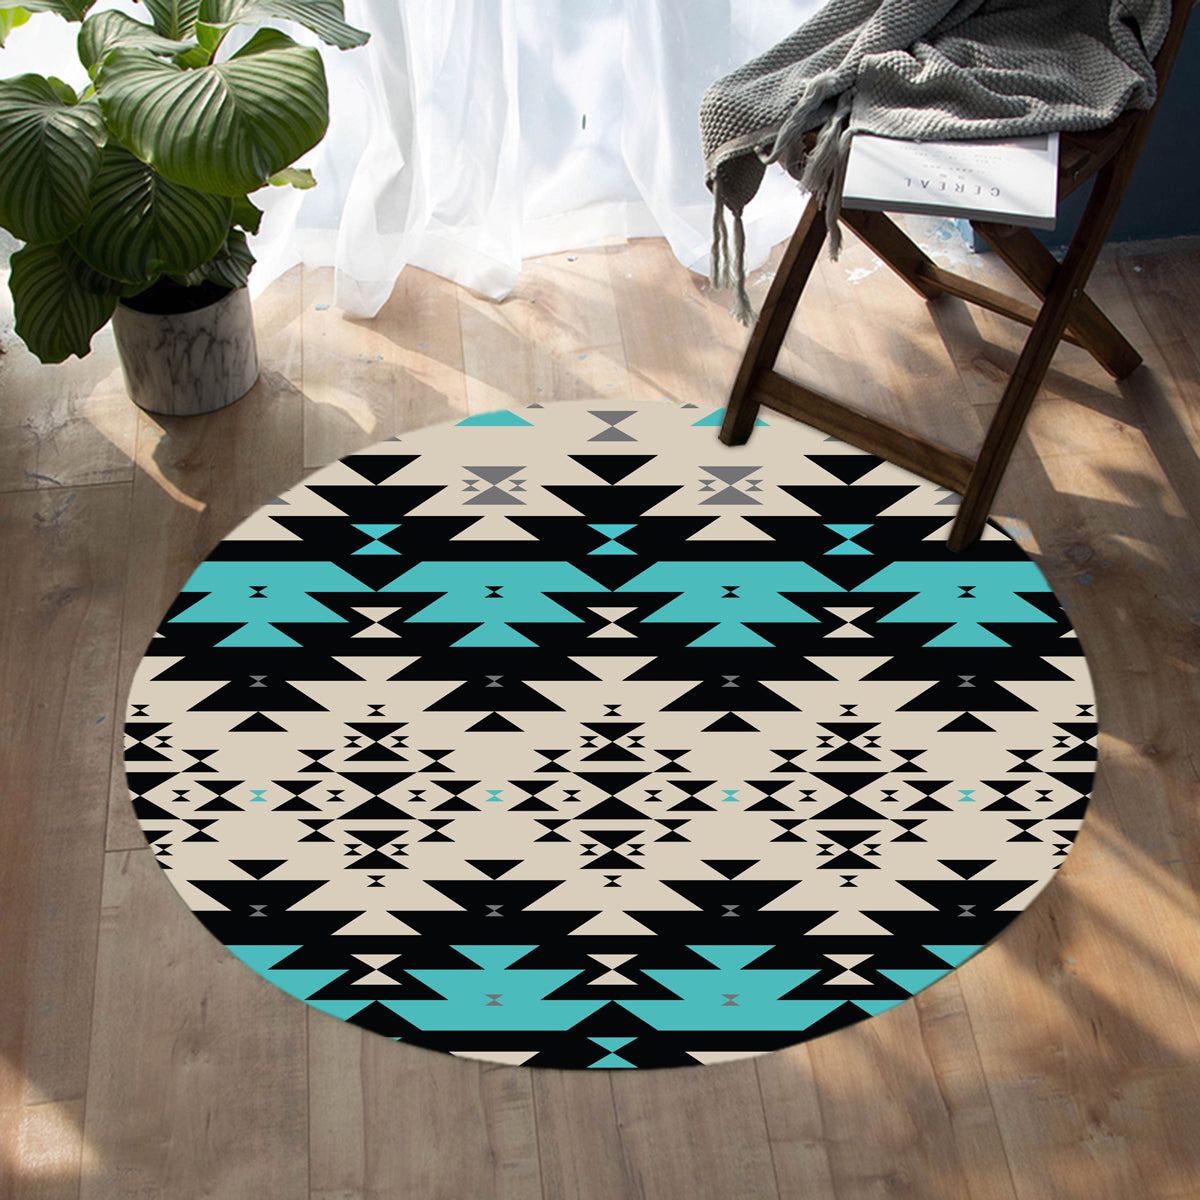 native-american-geometric-seamless-pattern-round-carpet